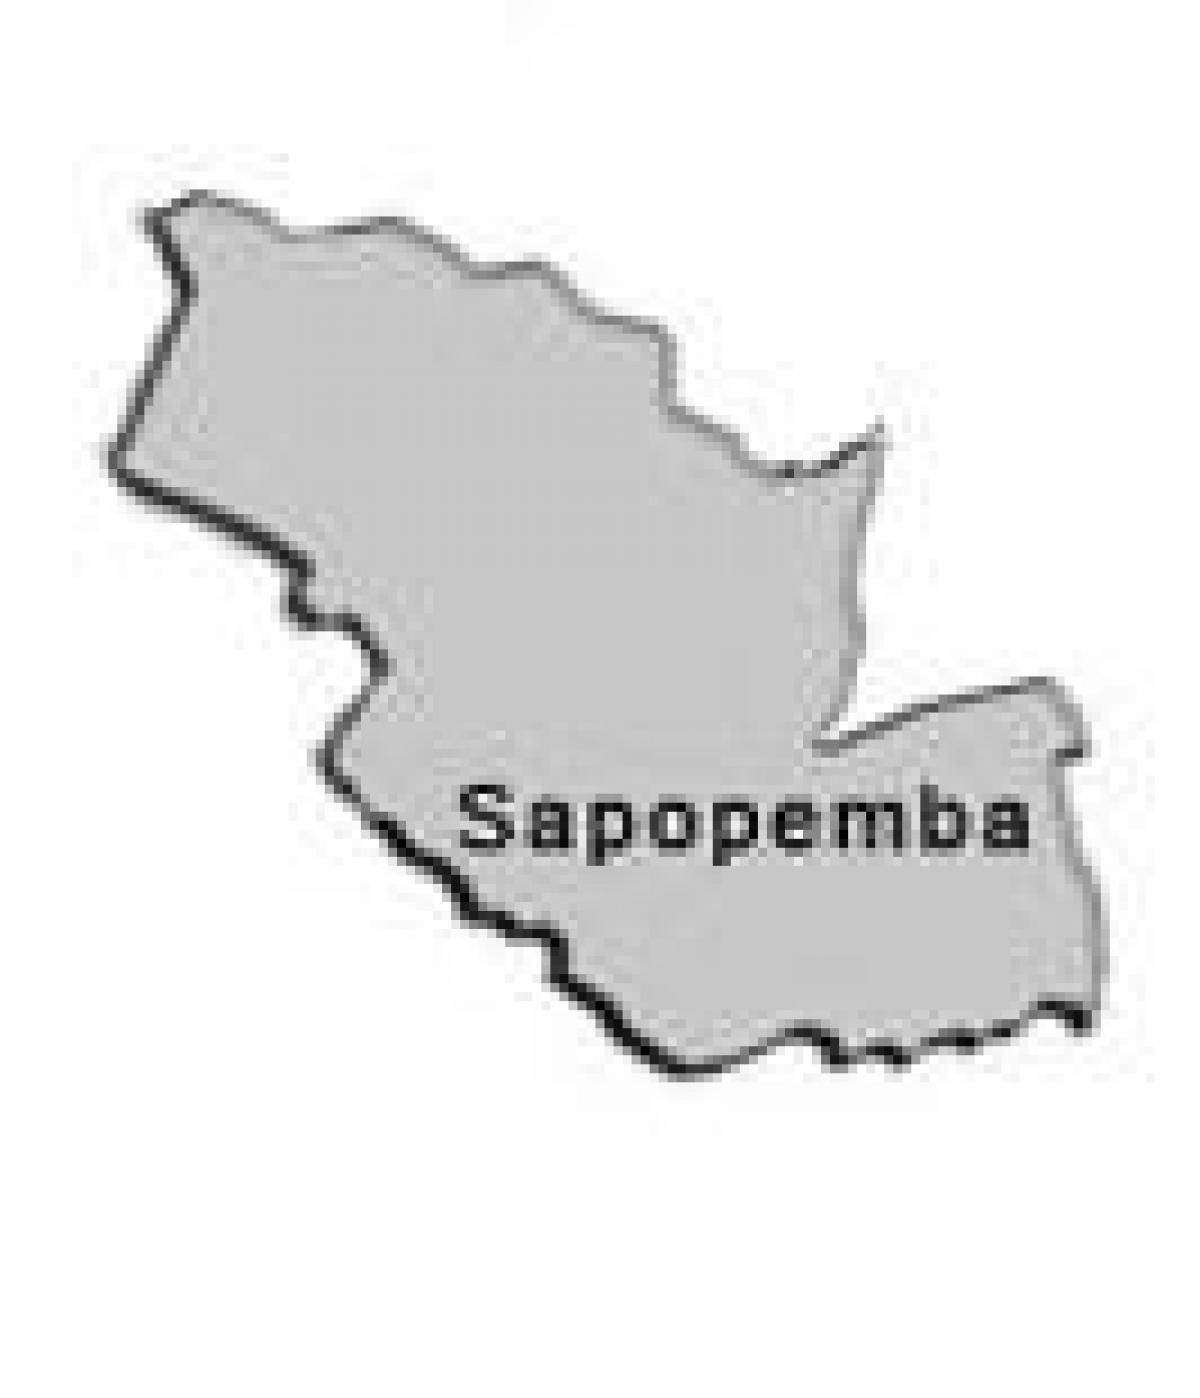 Kaart van Sapopembra sub-prefectuur